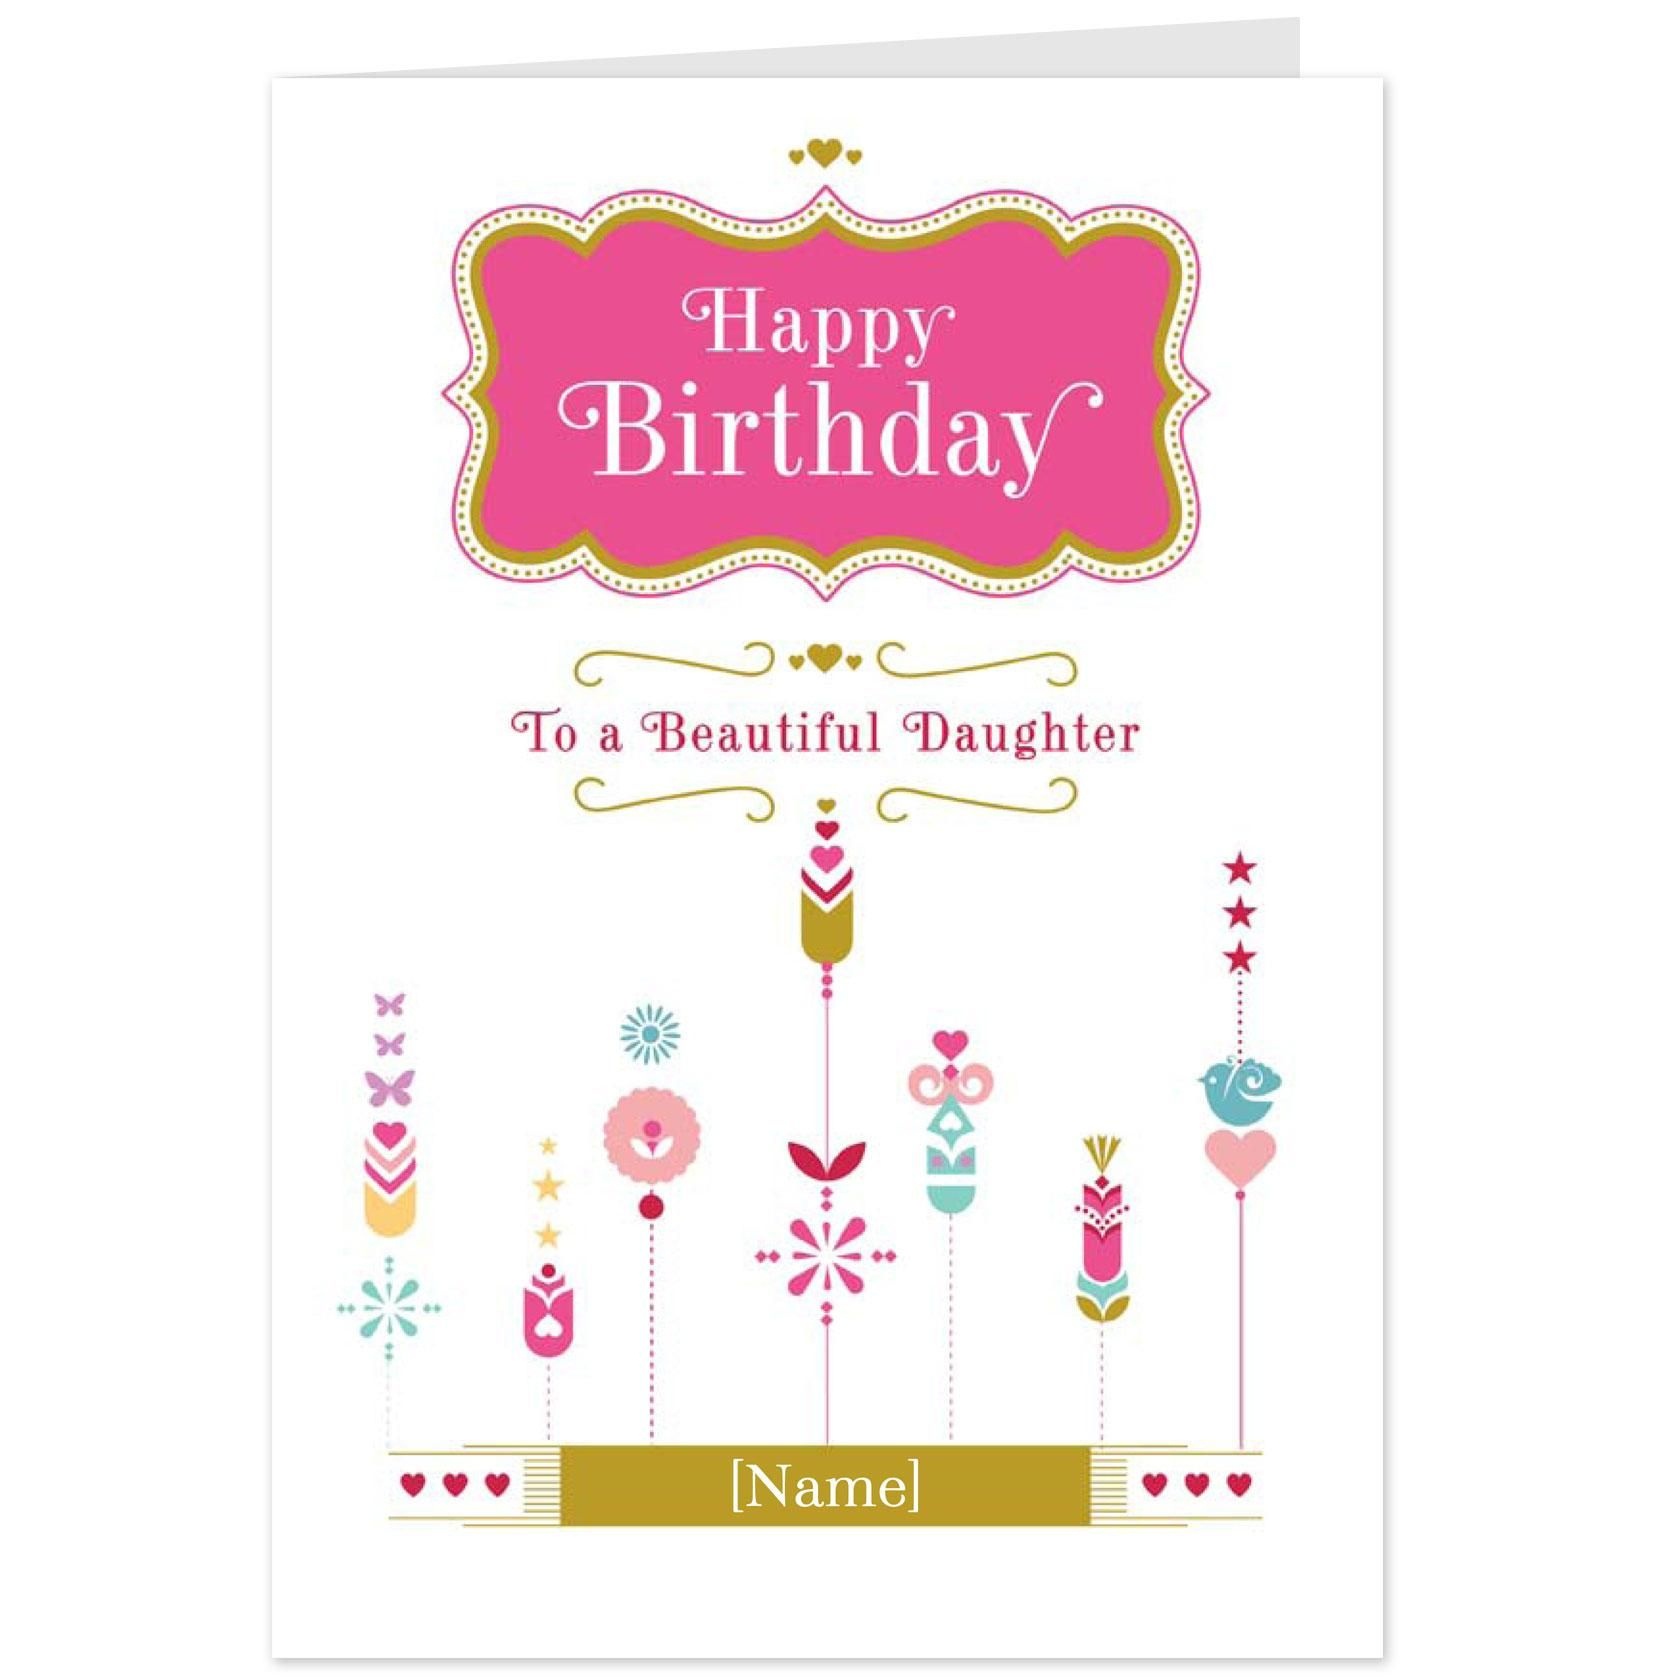 Free Printable Hallmark Birthday Cards | My Birthday - Free Printable Hallmark Birthday Cards